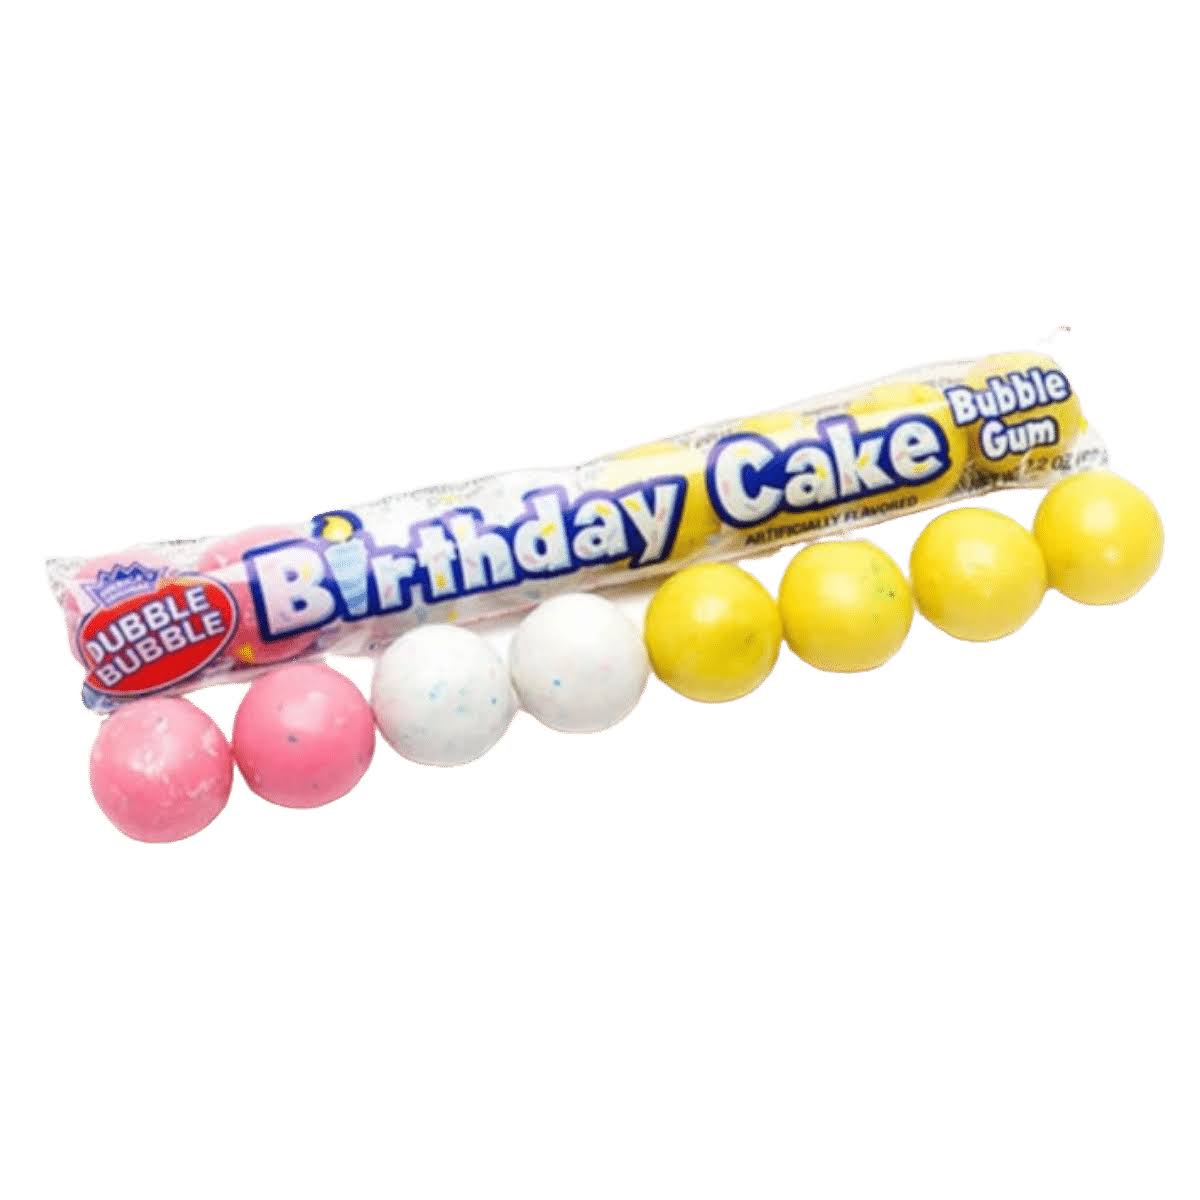 Dubble Bubble Birthday Cake Bubble Gum 62g - 8 Ball Pack